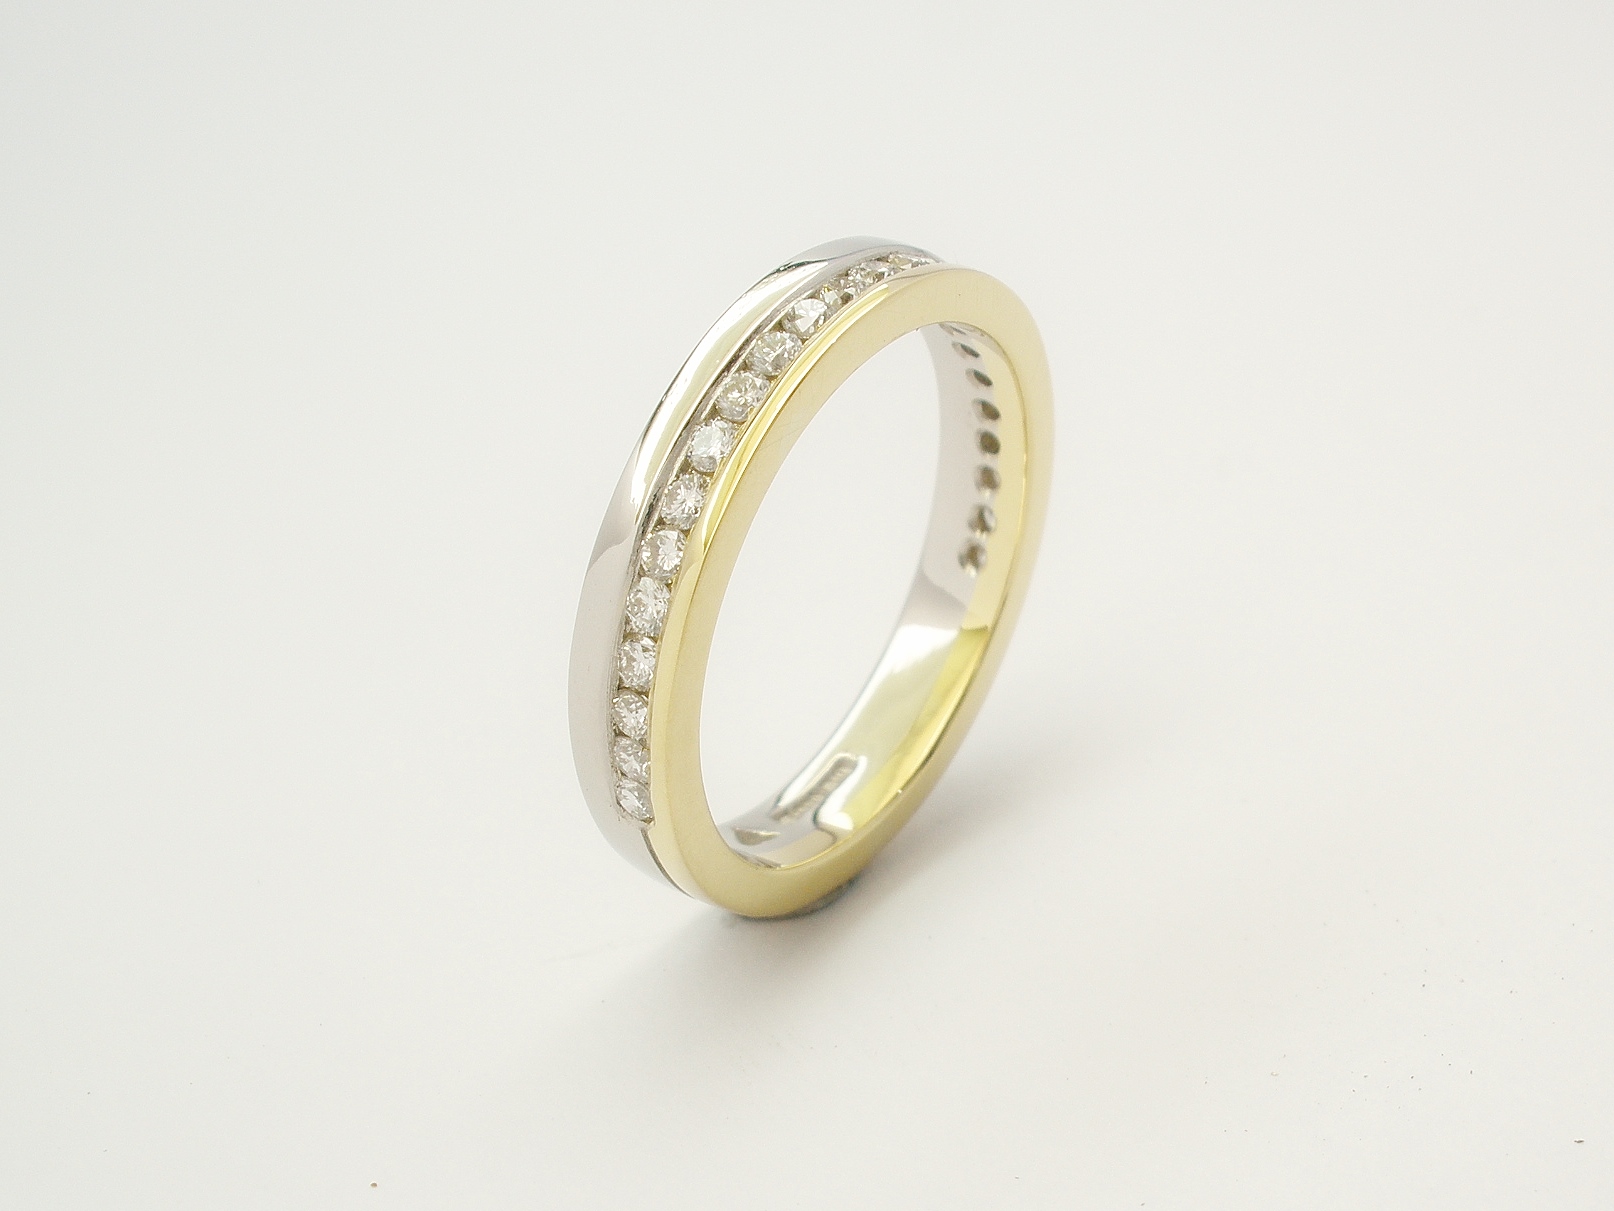 18ct. yellow gold & platinum off-set brilliant cut diamond wedding ring.